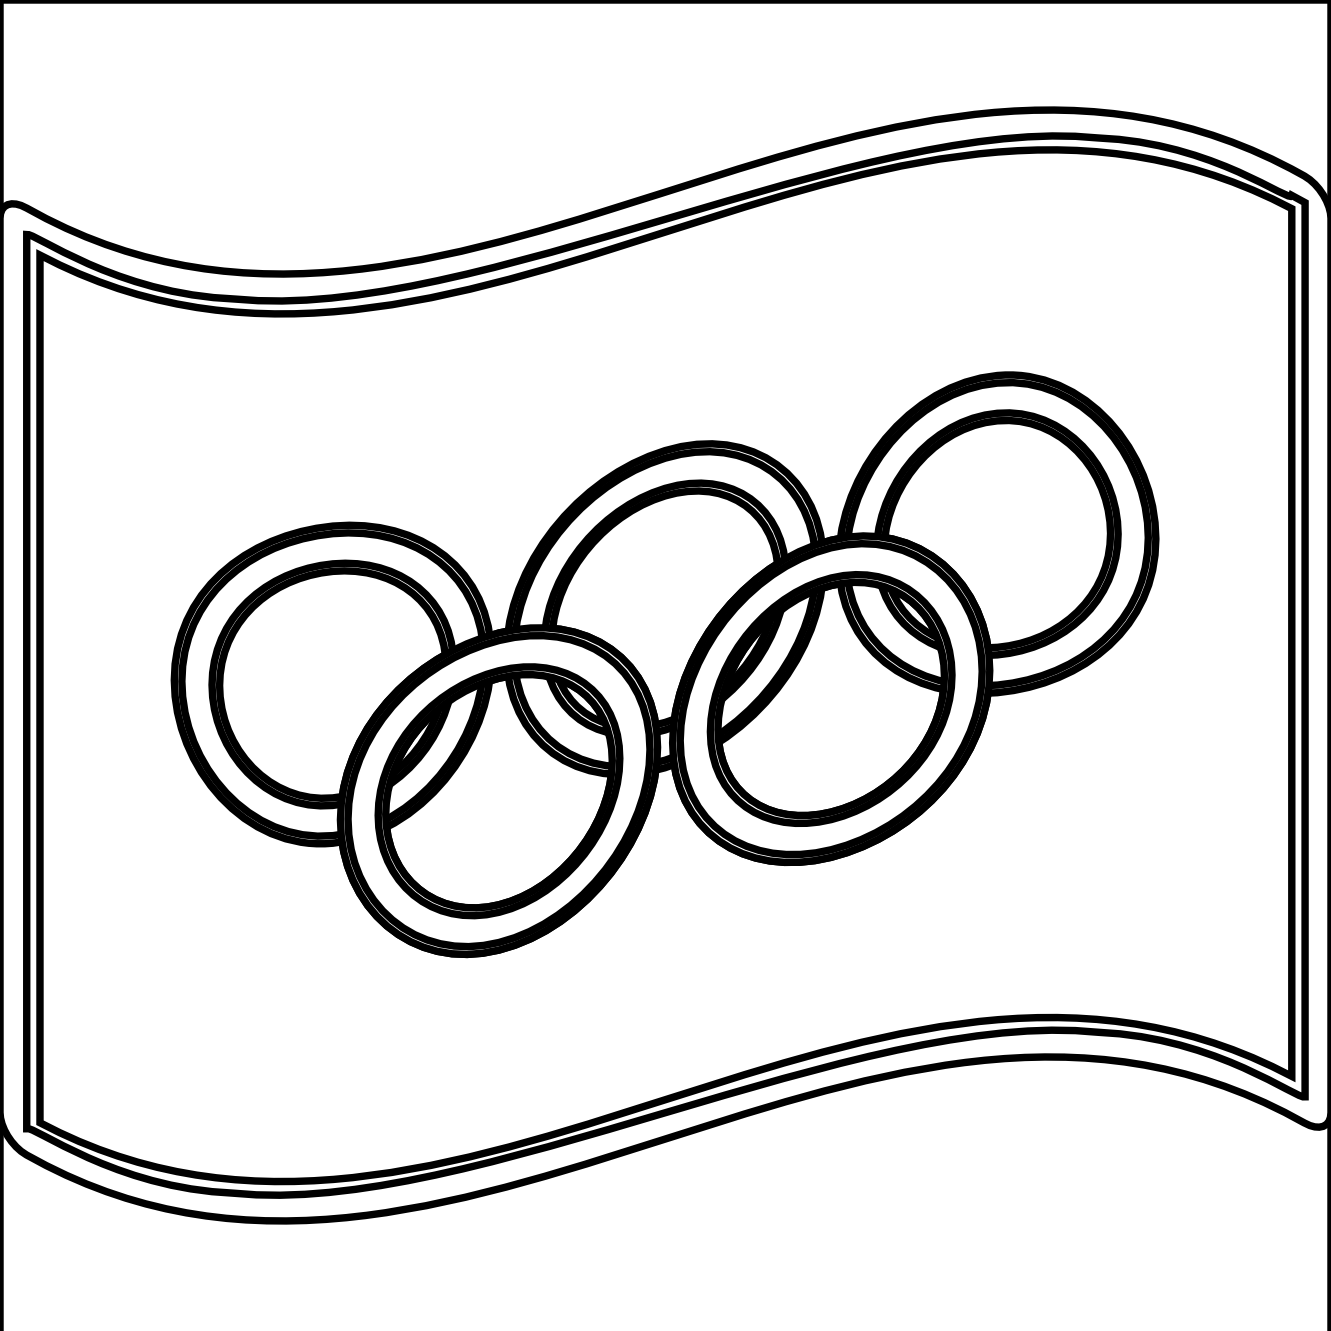 nuvola olympic flag black white line art tattoo ...